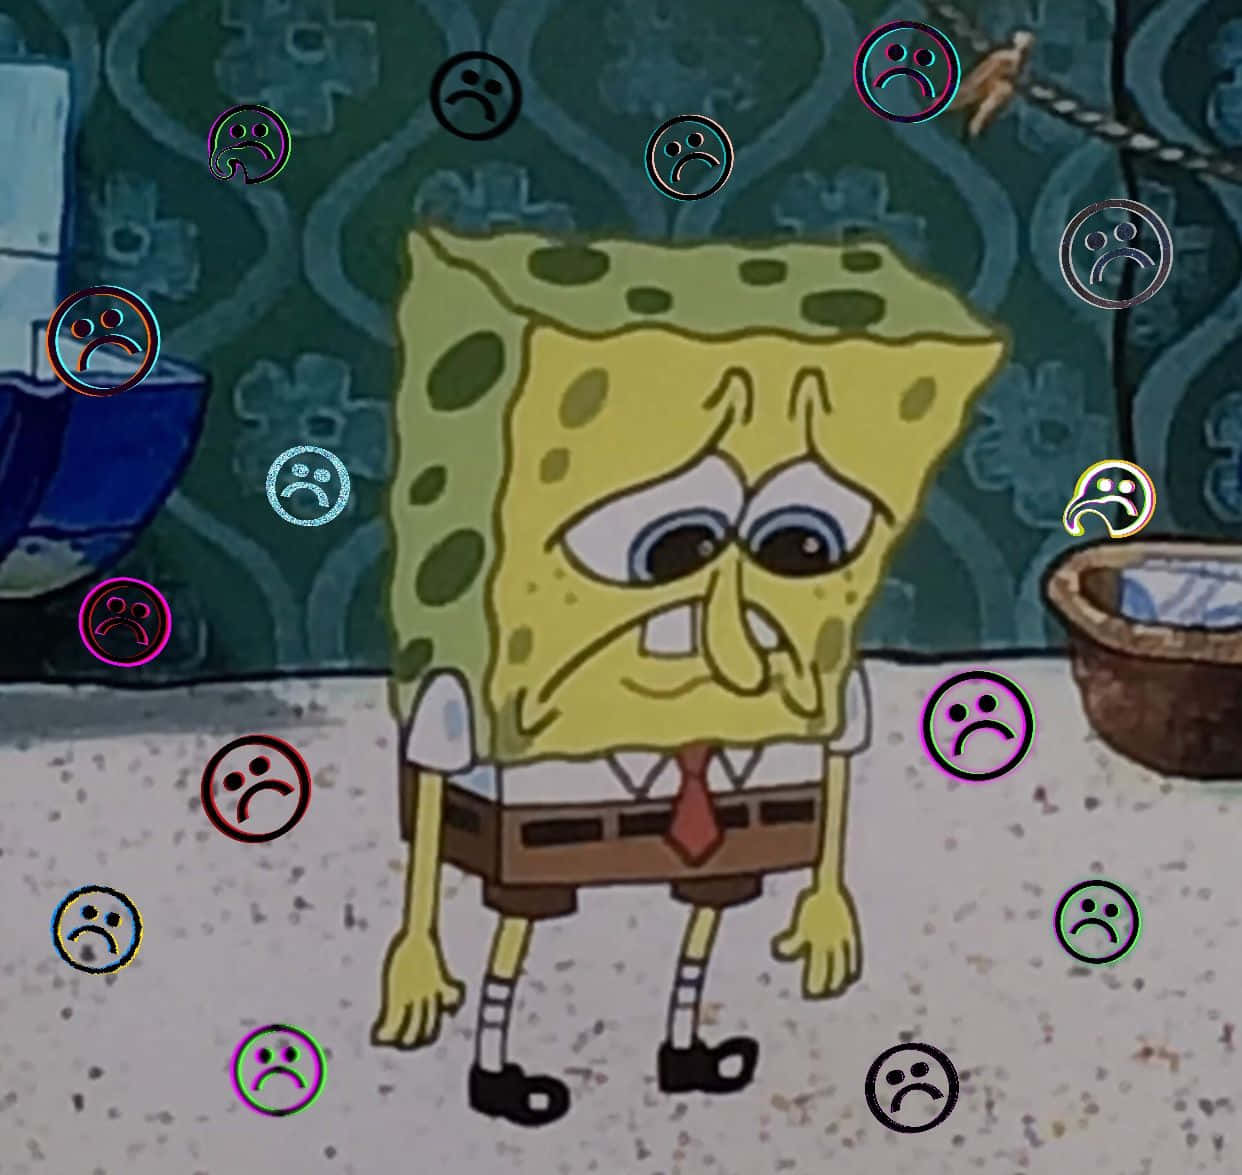 Download Spongebob Crying And Sad Looking At Cup Wallpaper